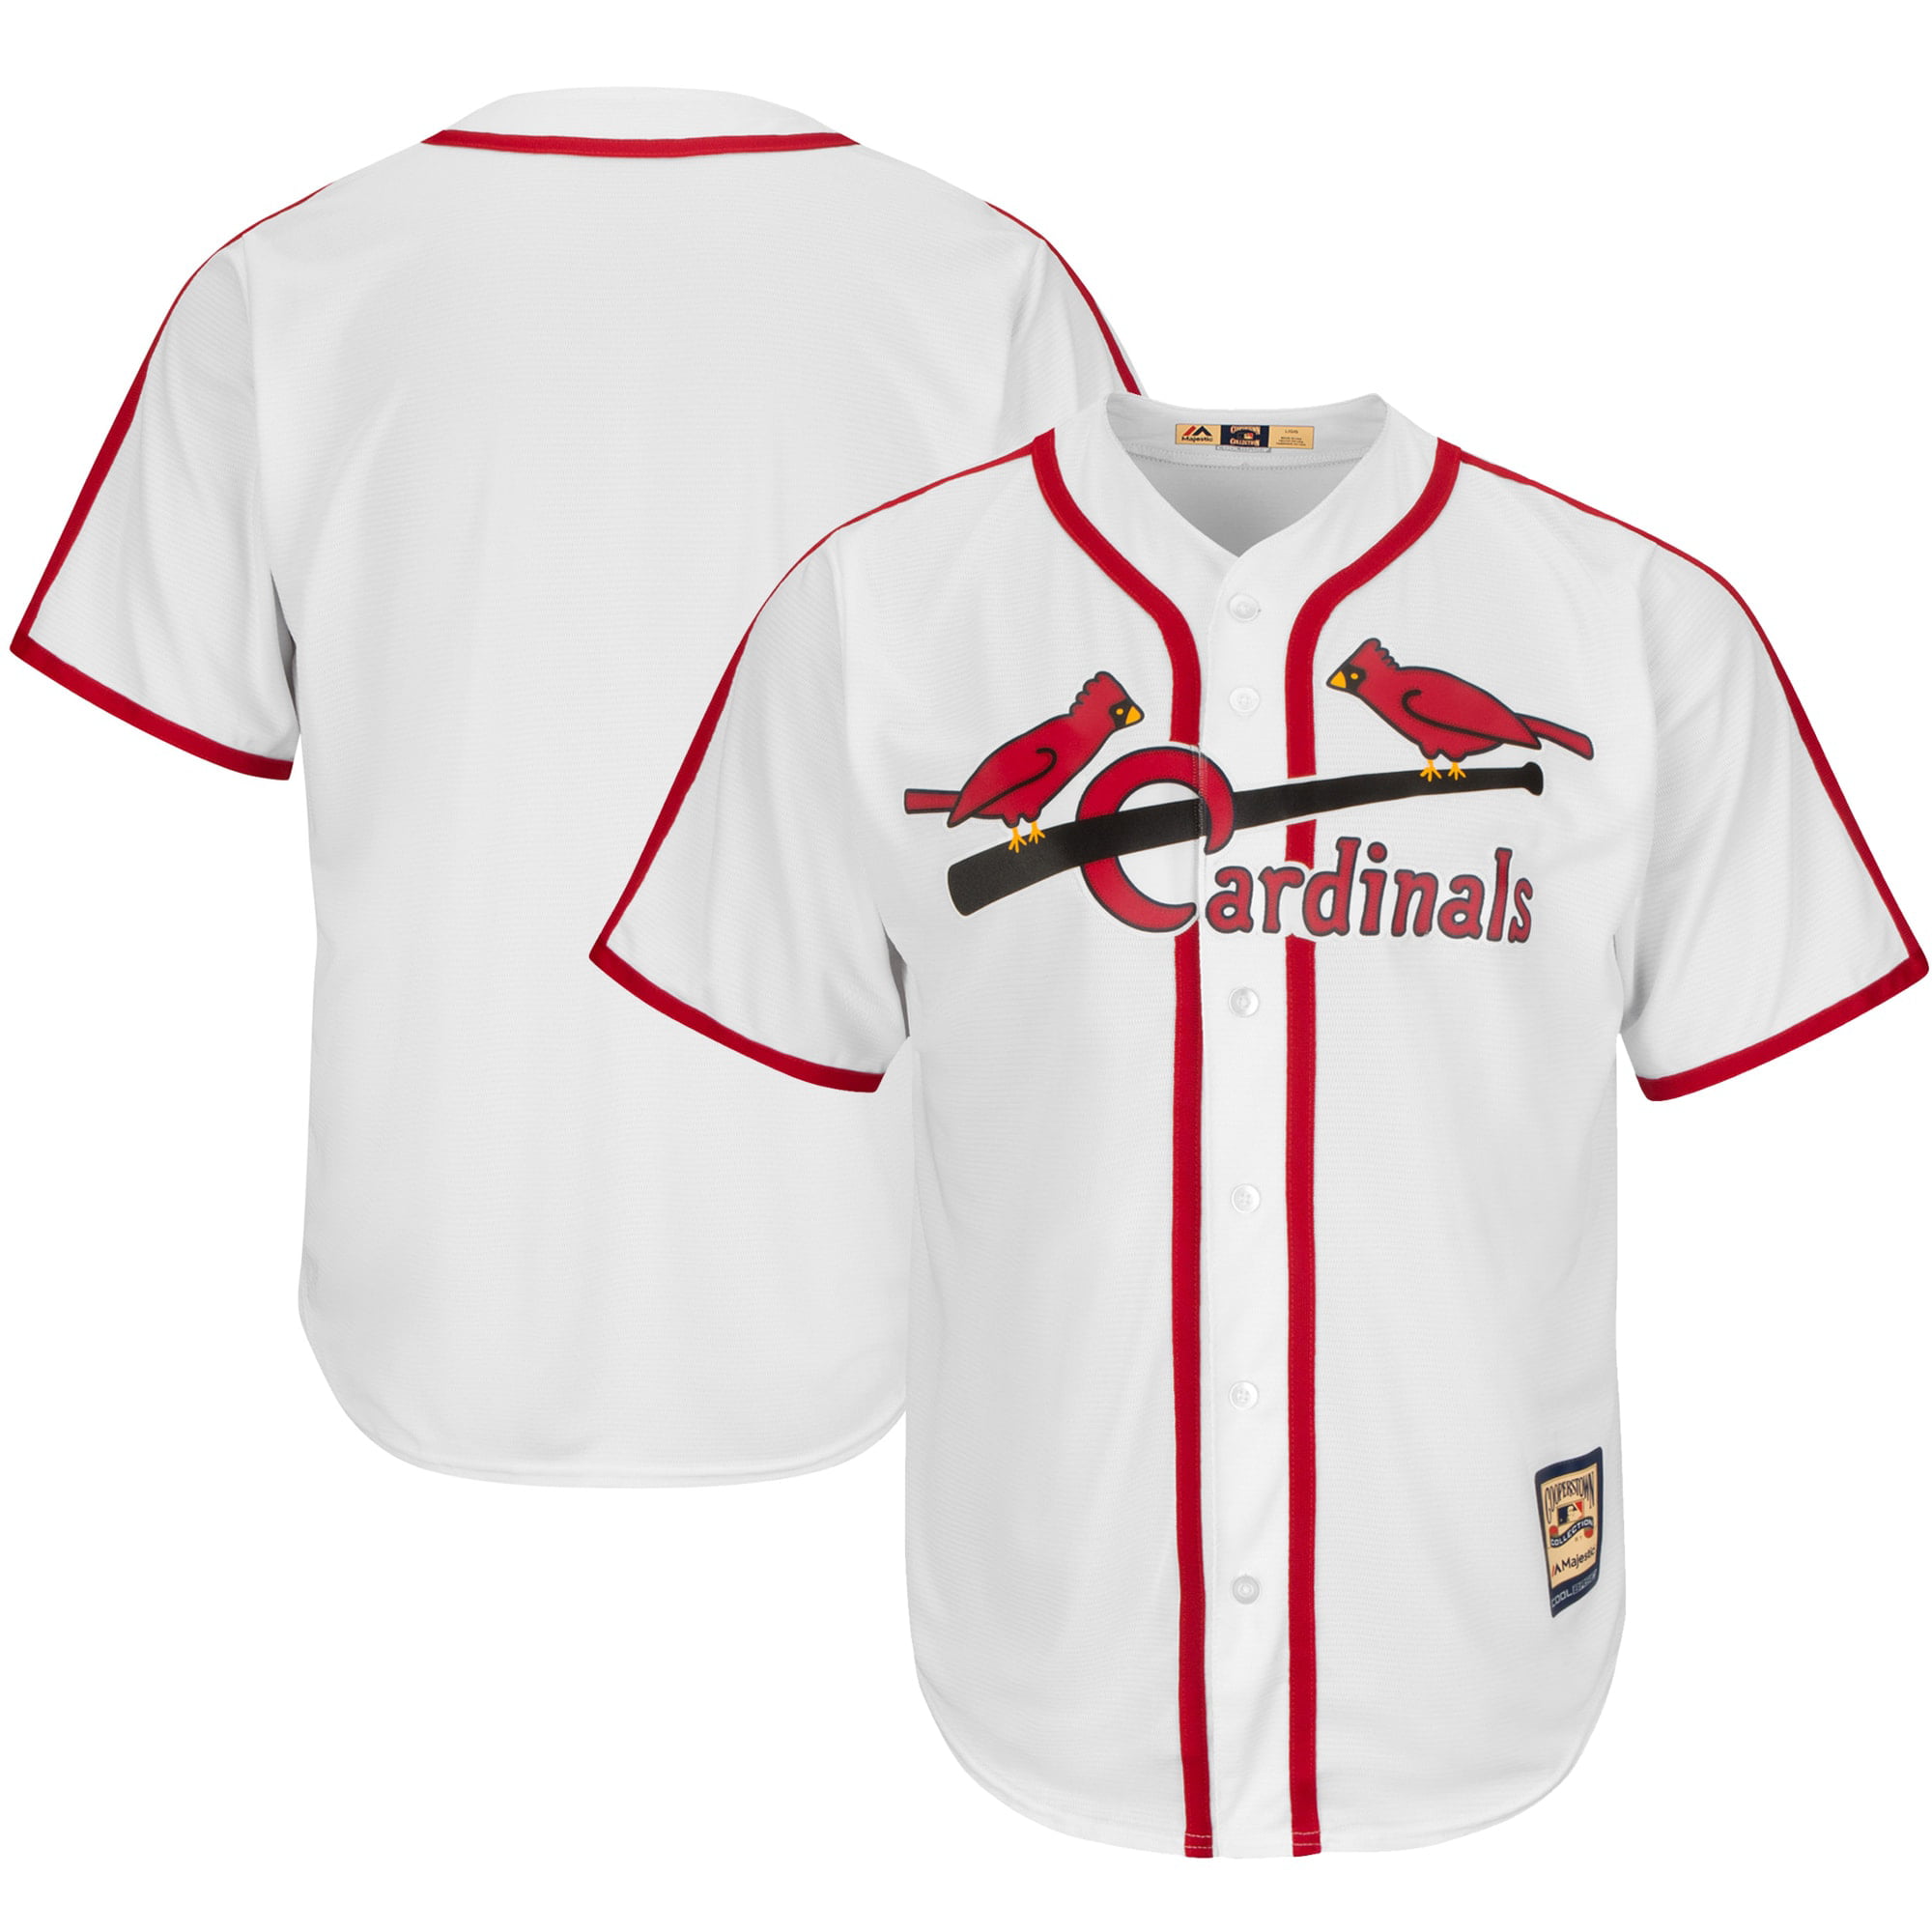 cardinals majestic jersey